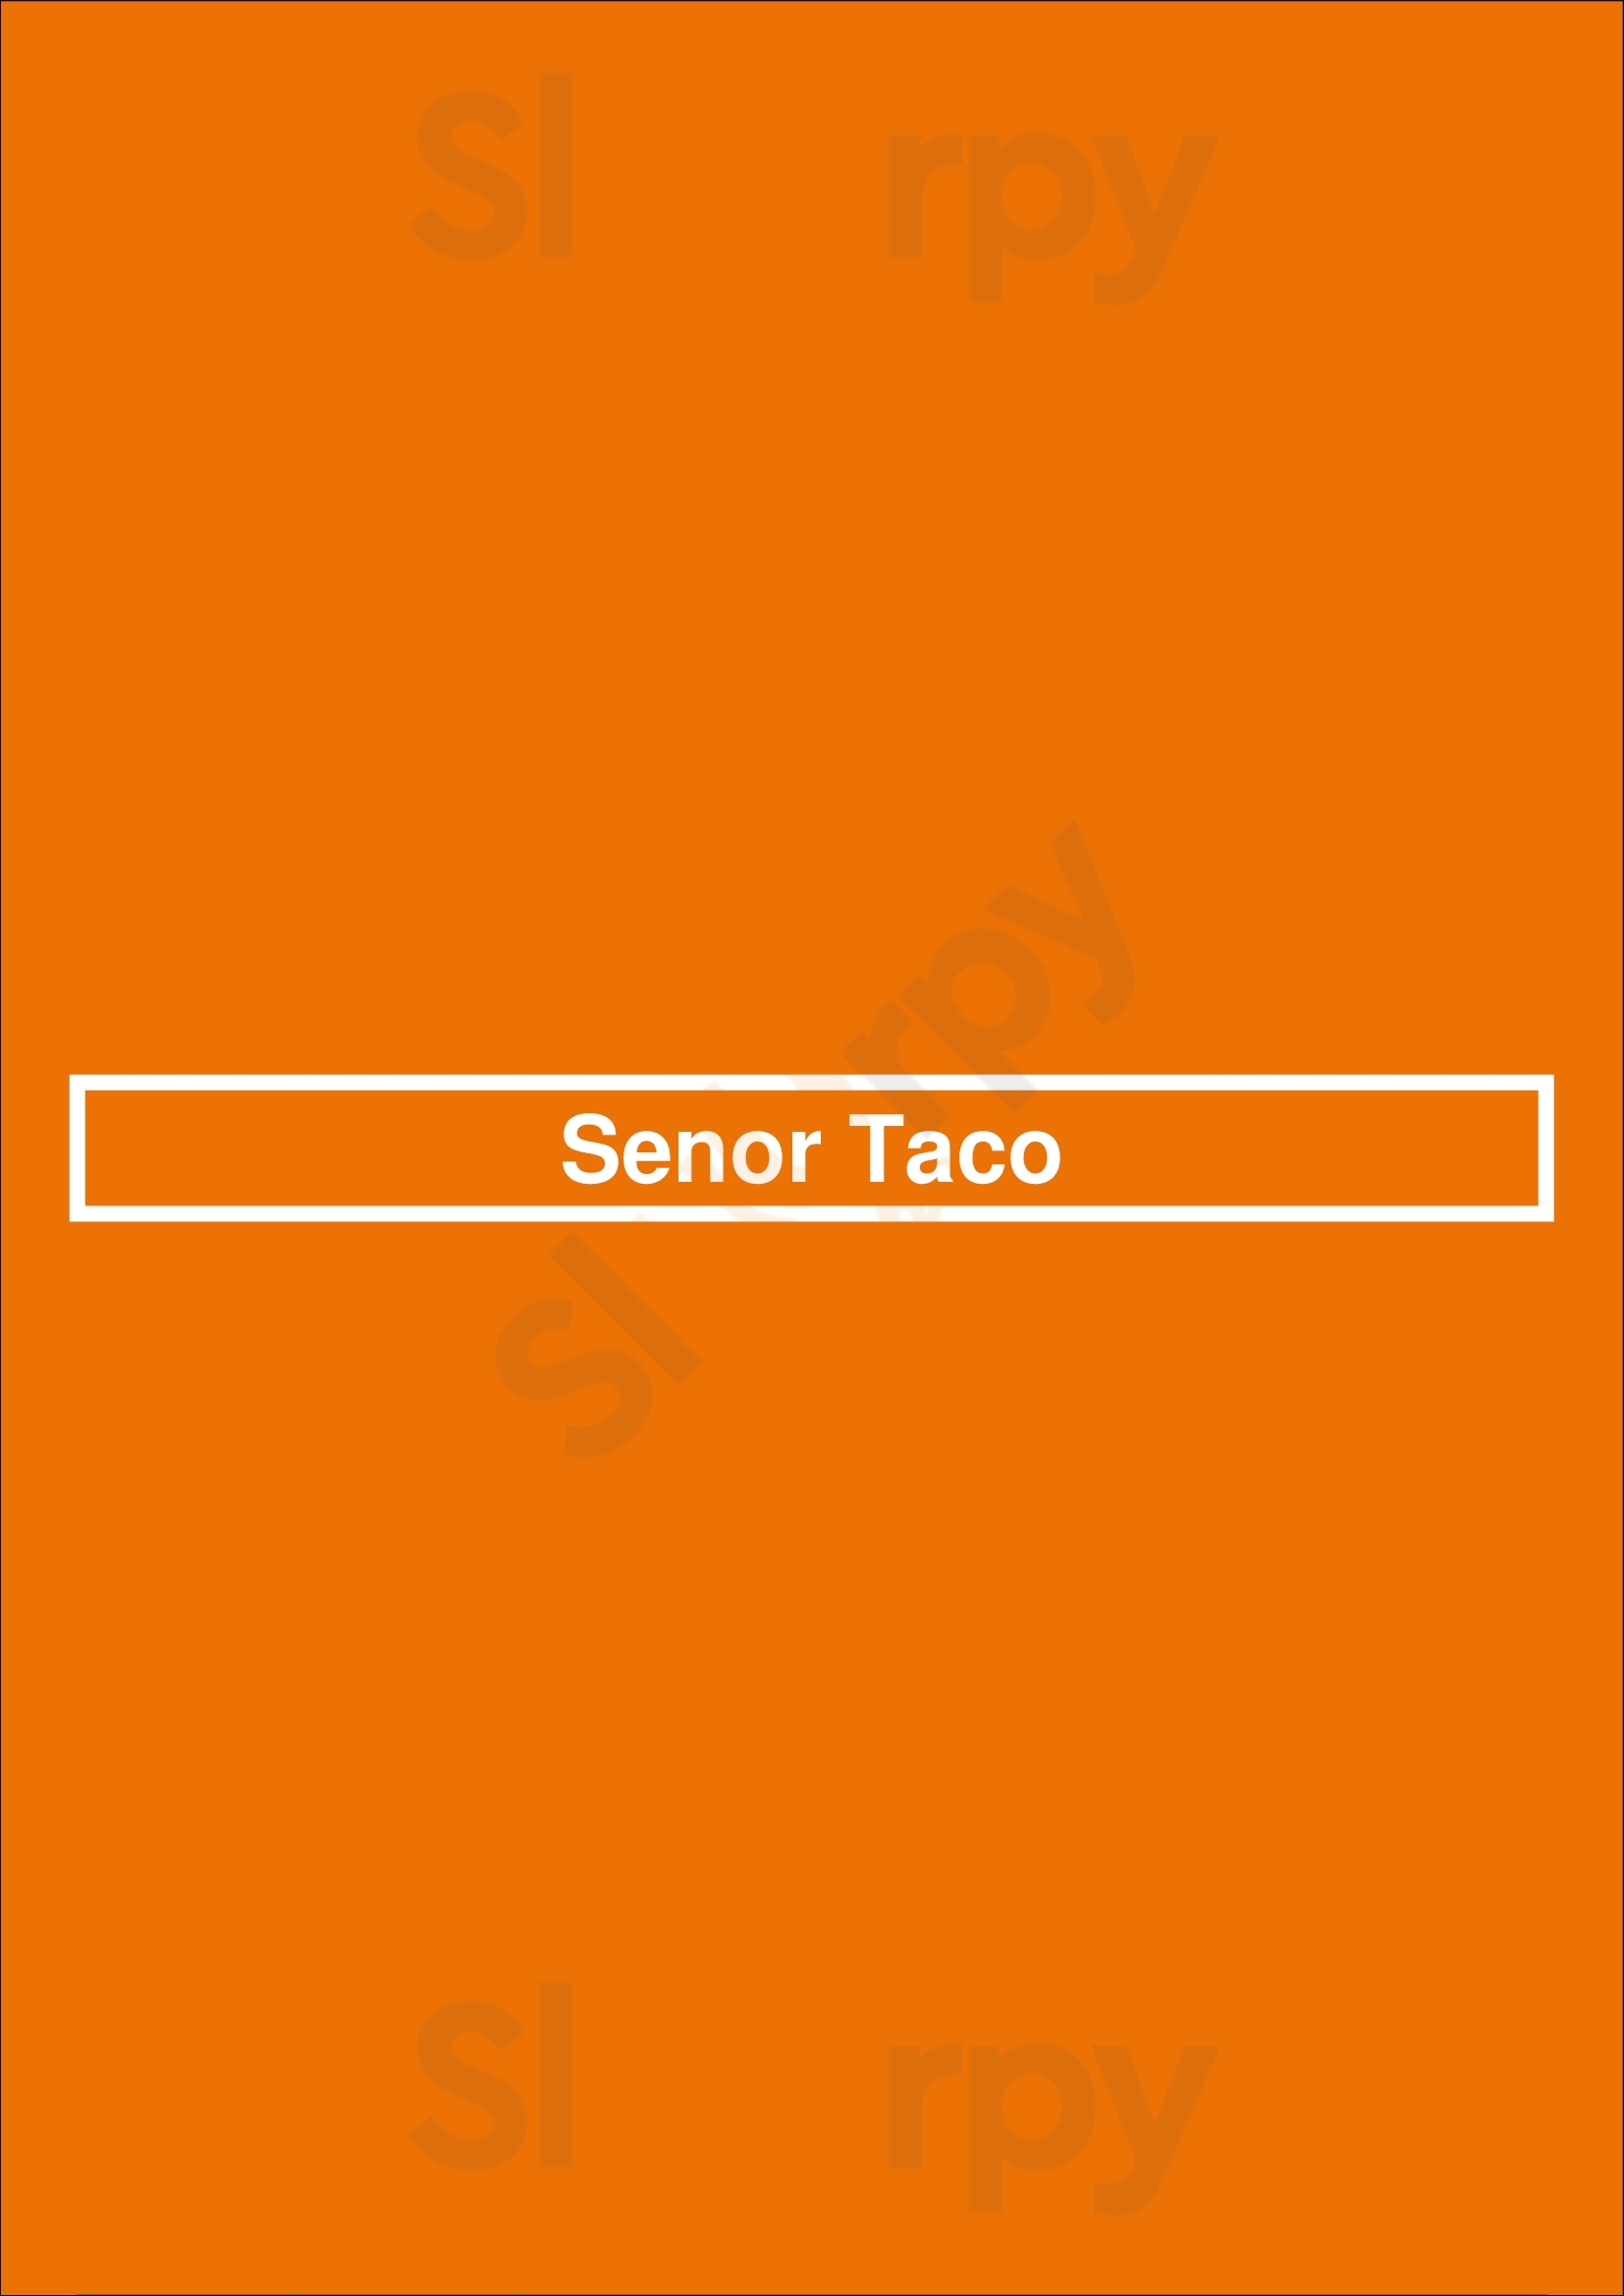 Senor Taco Knoxville Menu - 1